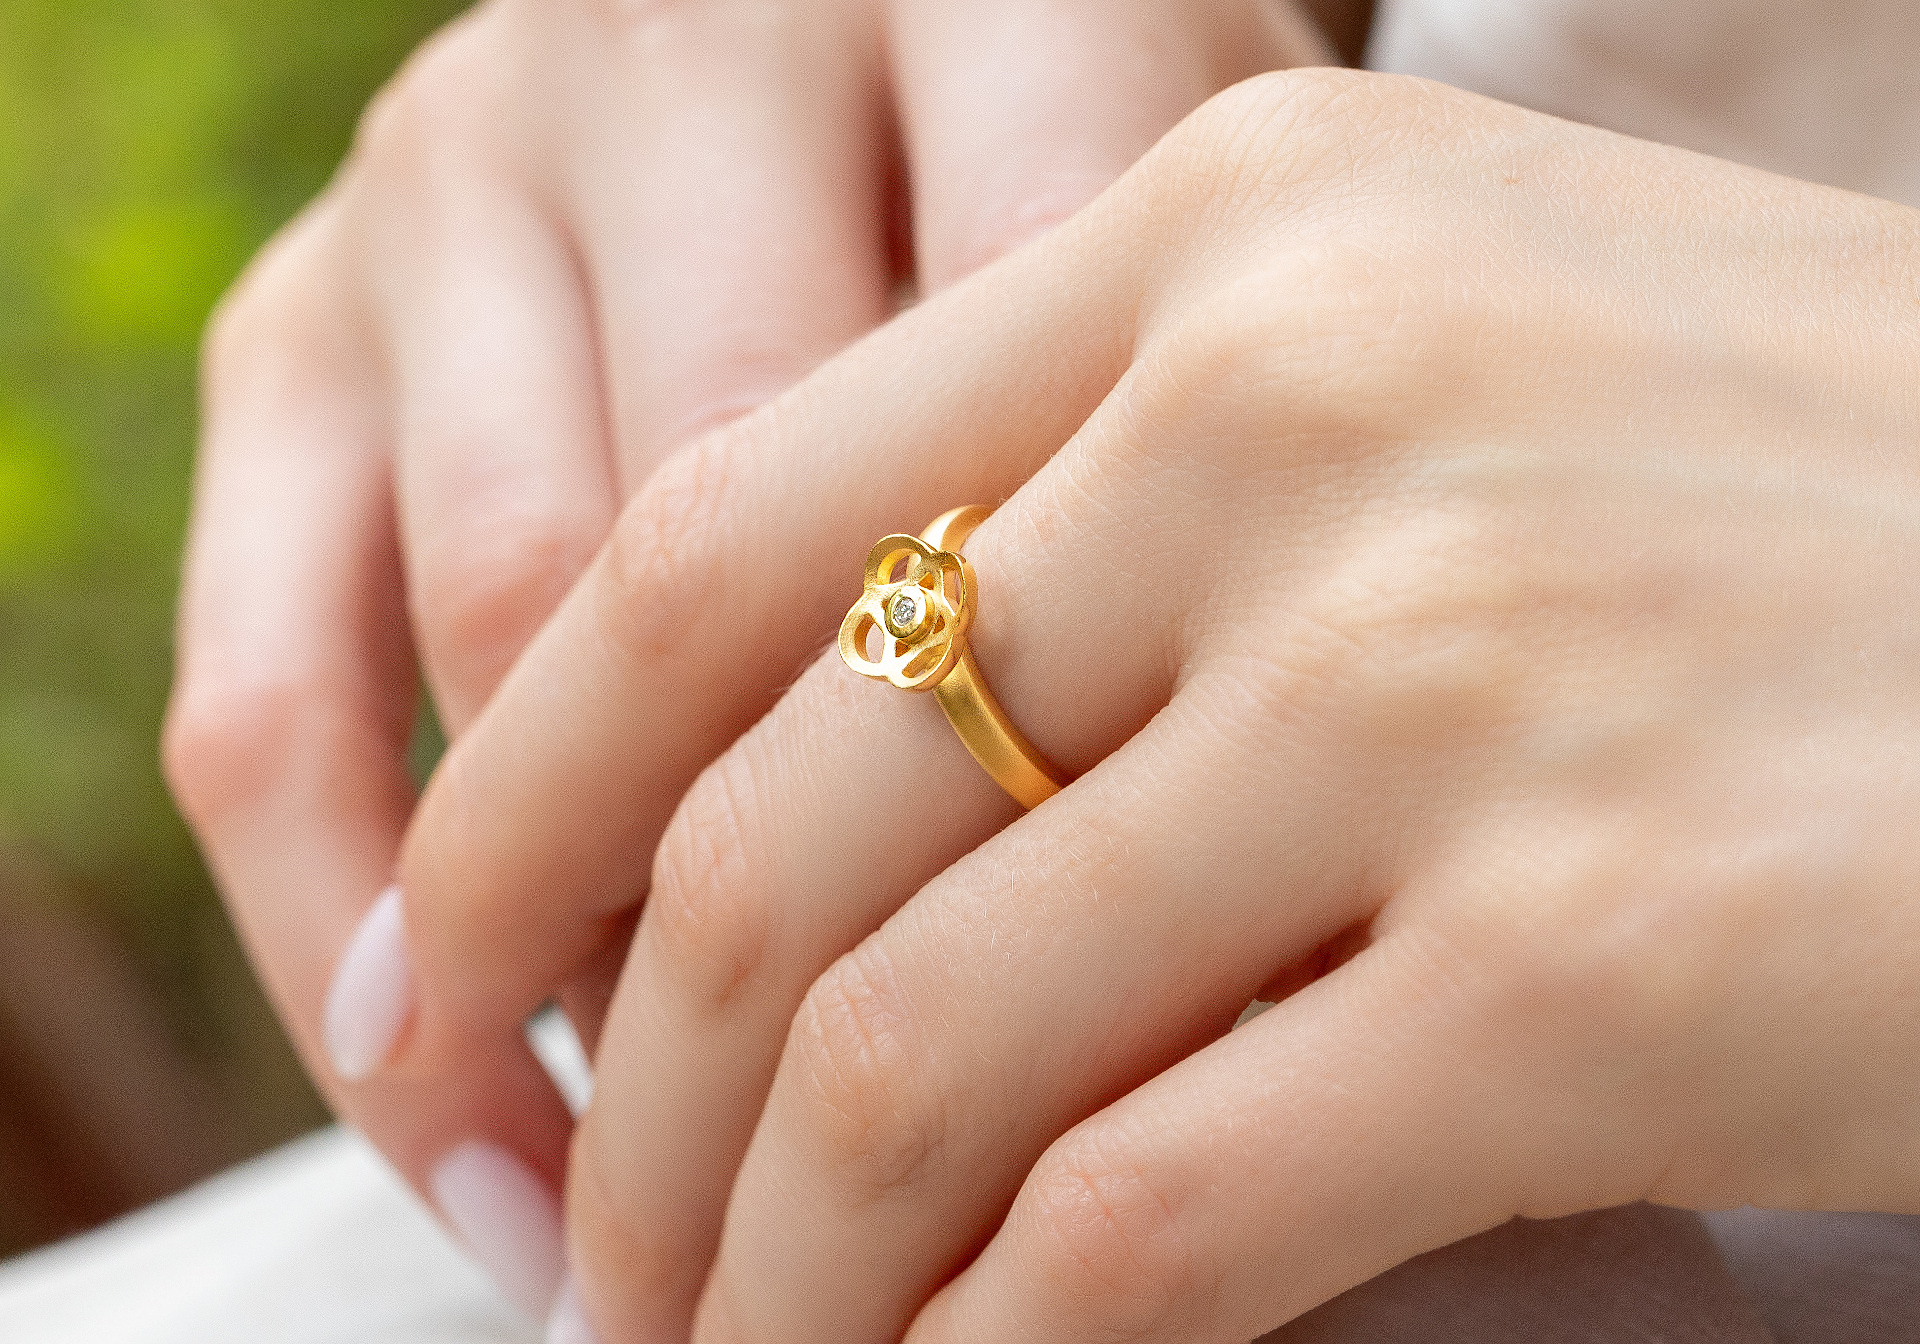 Ring Golden Romantic 